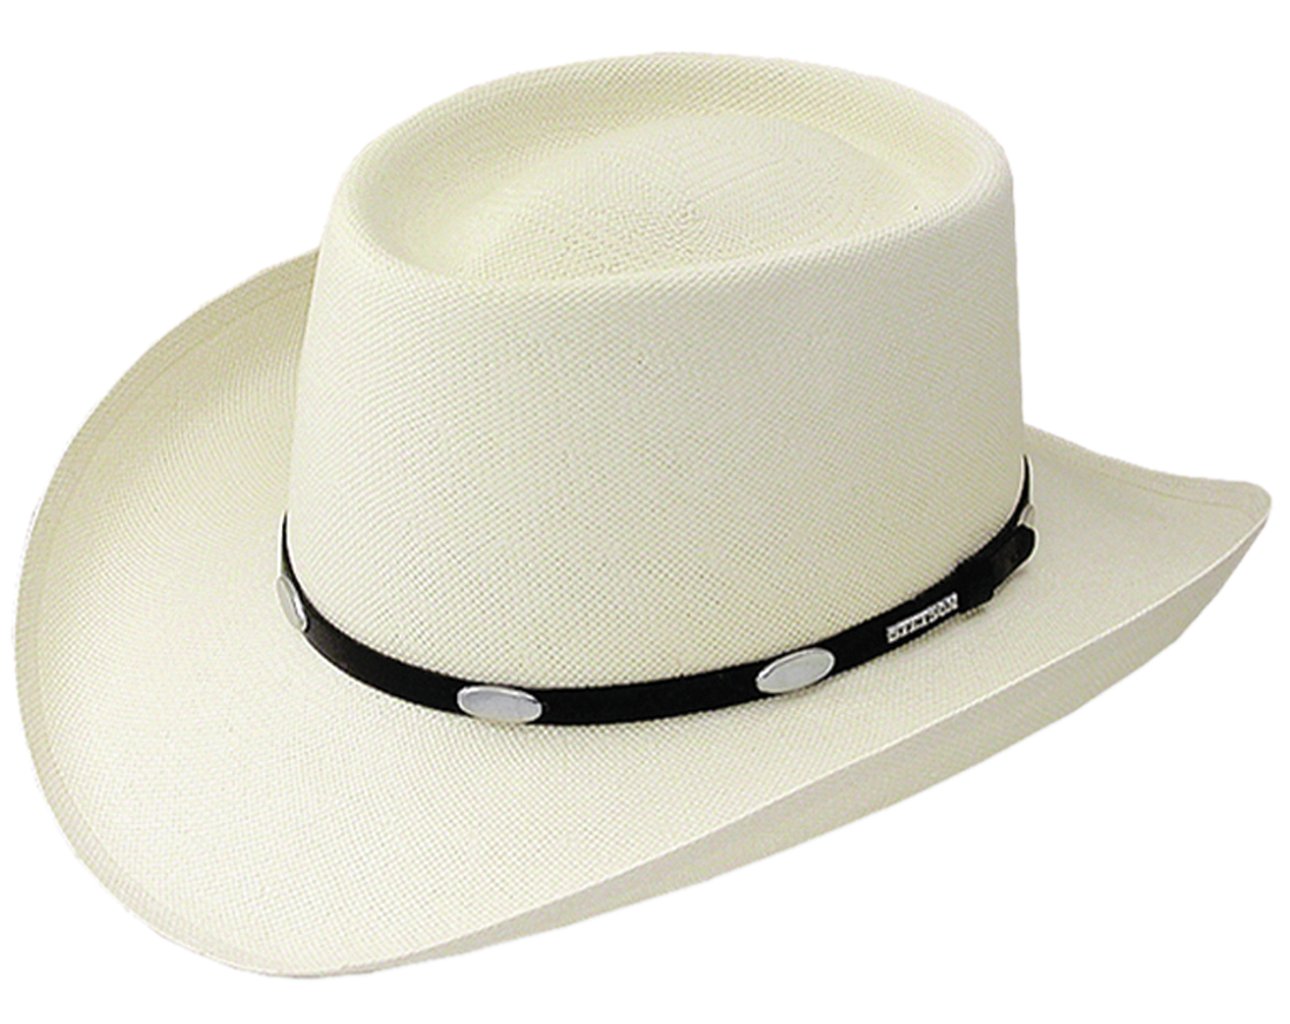 Stetson Royal Flush Straw Hat